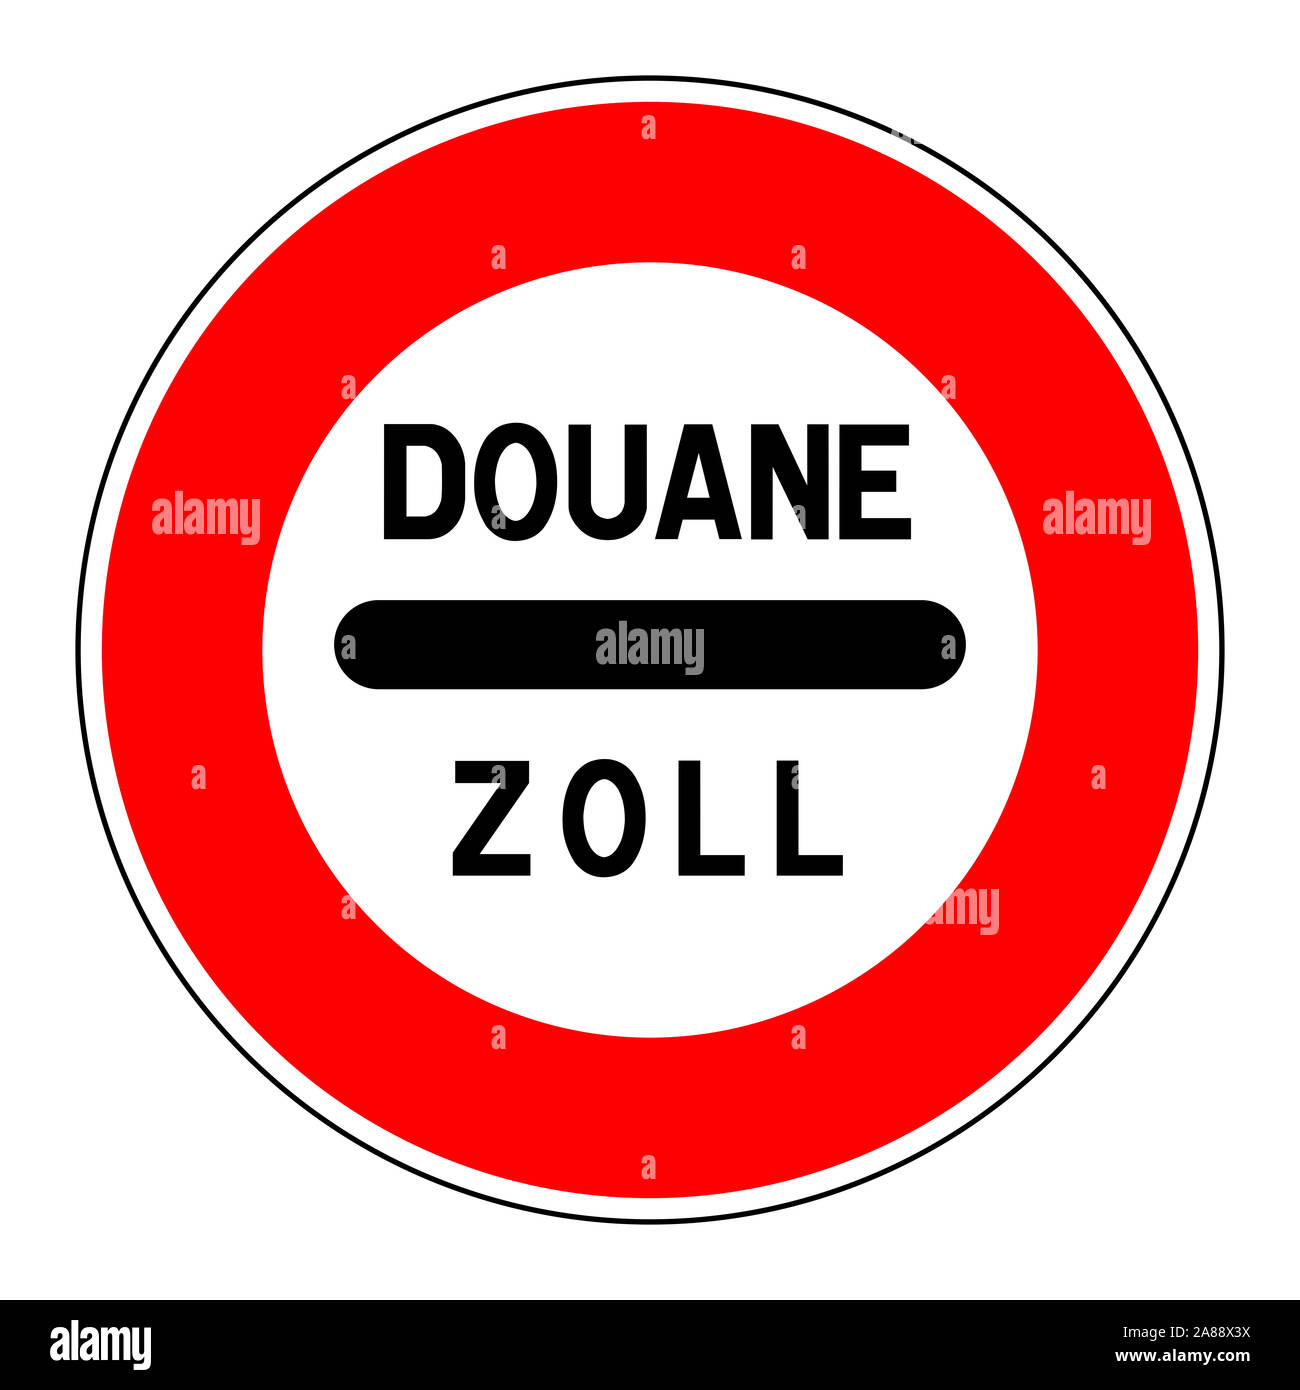 Douane zoll sign illustration Stock Photo